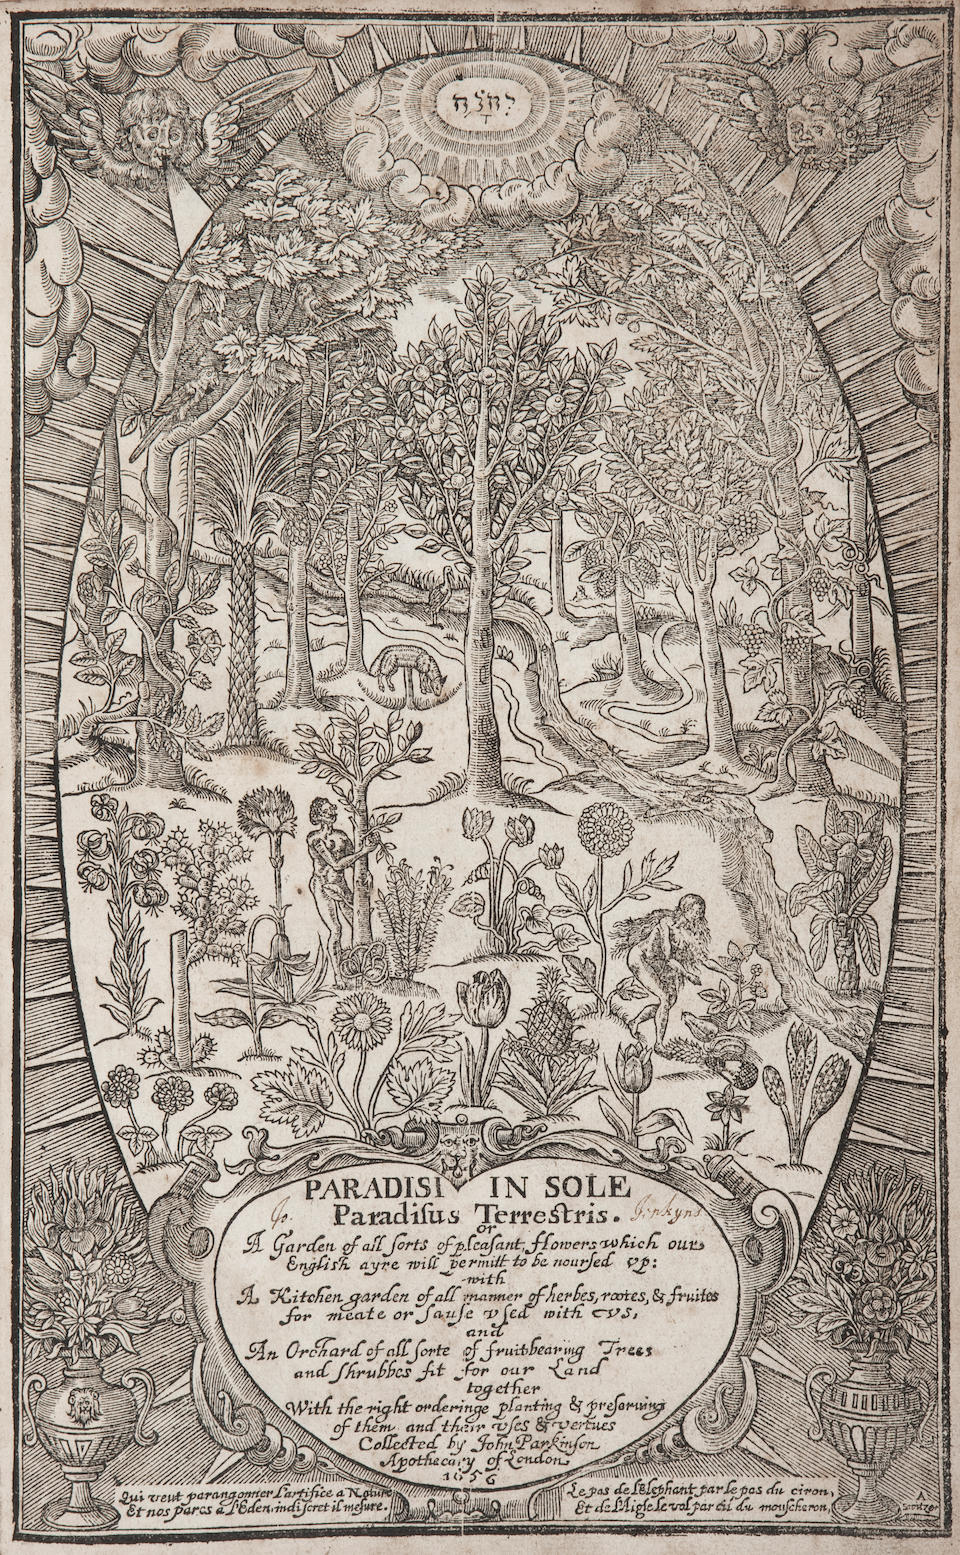 PARKINSON (JOHN) Paradisi in sole paradisi terrestris, Printed by R. N., 1656